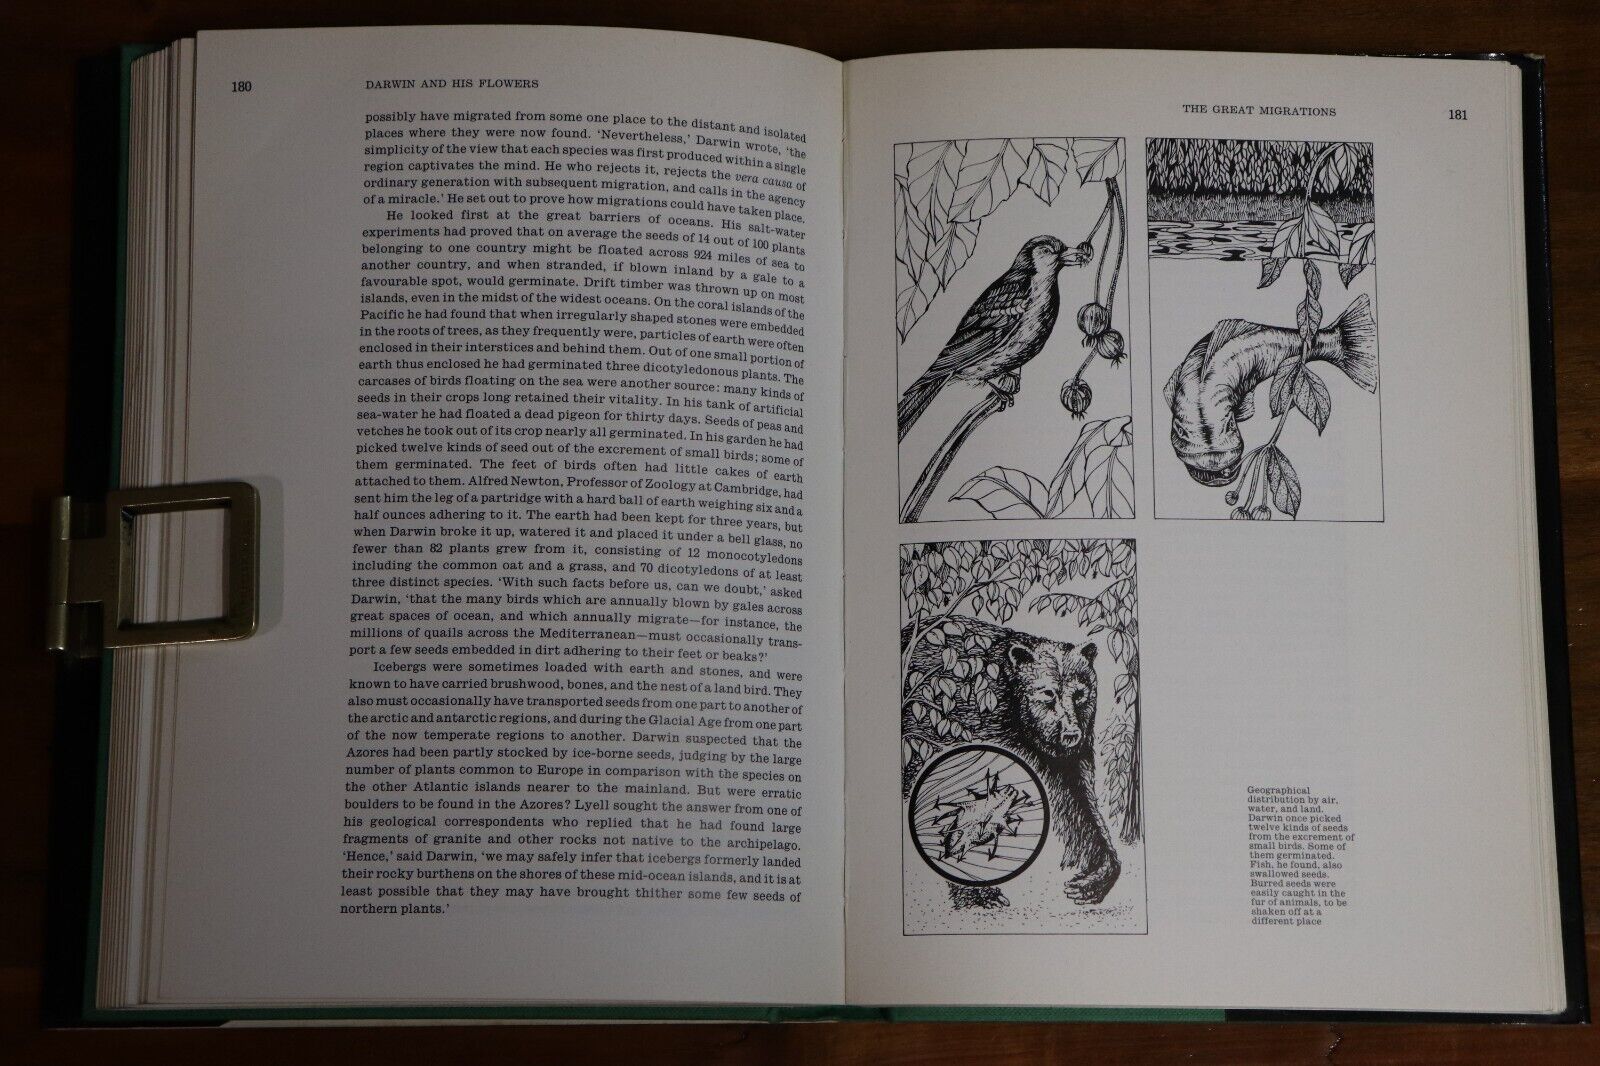 Darwin & His Flowers - Natural Selection - 1977 - Charles Darwin Science Book